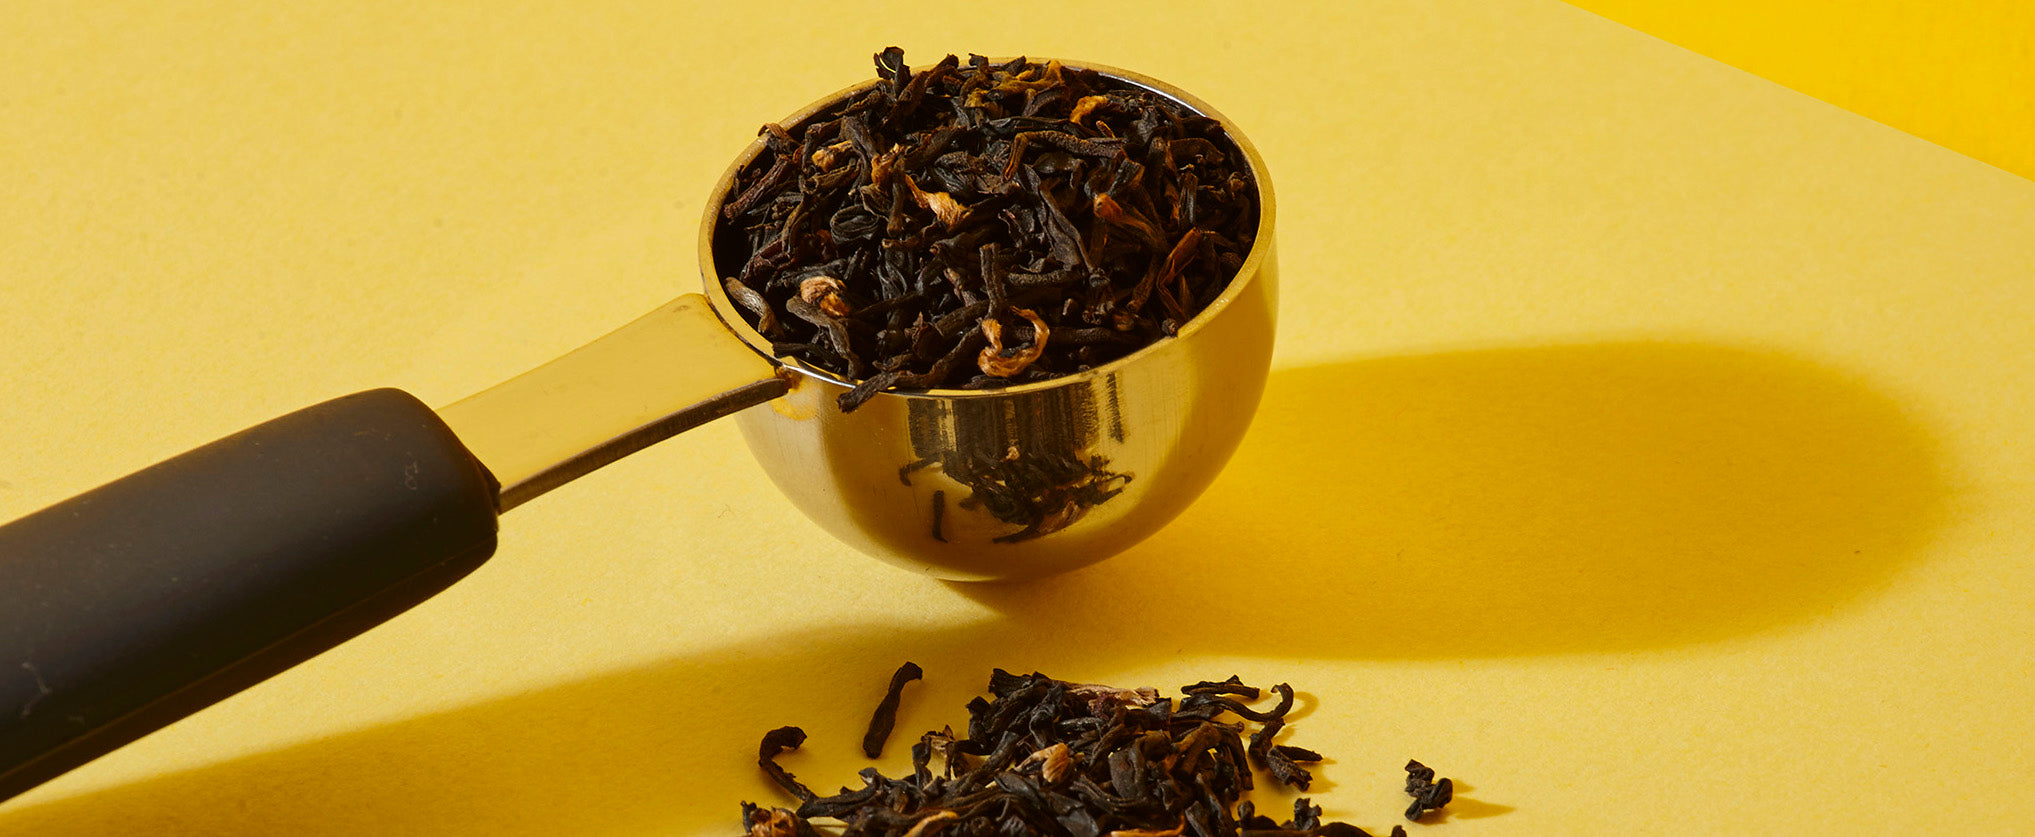 How to Make Loose Leaf Tea - Tea Brewing Methods - In Pursuit of Tea